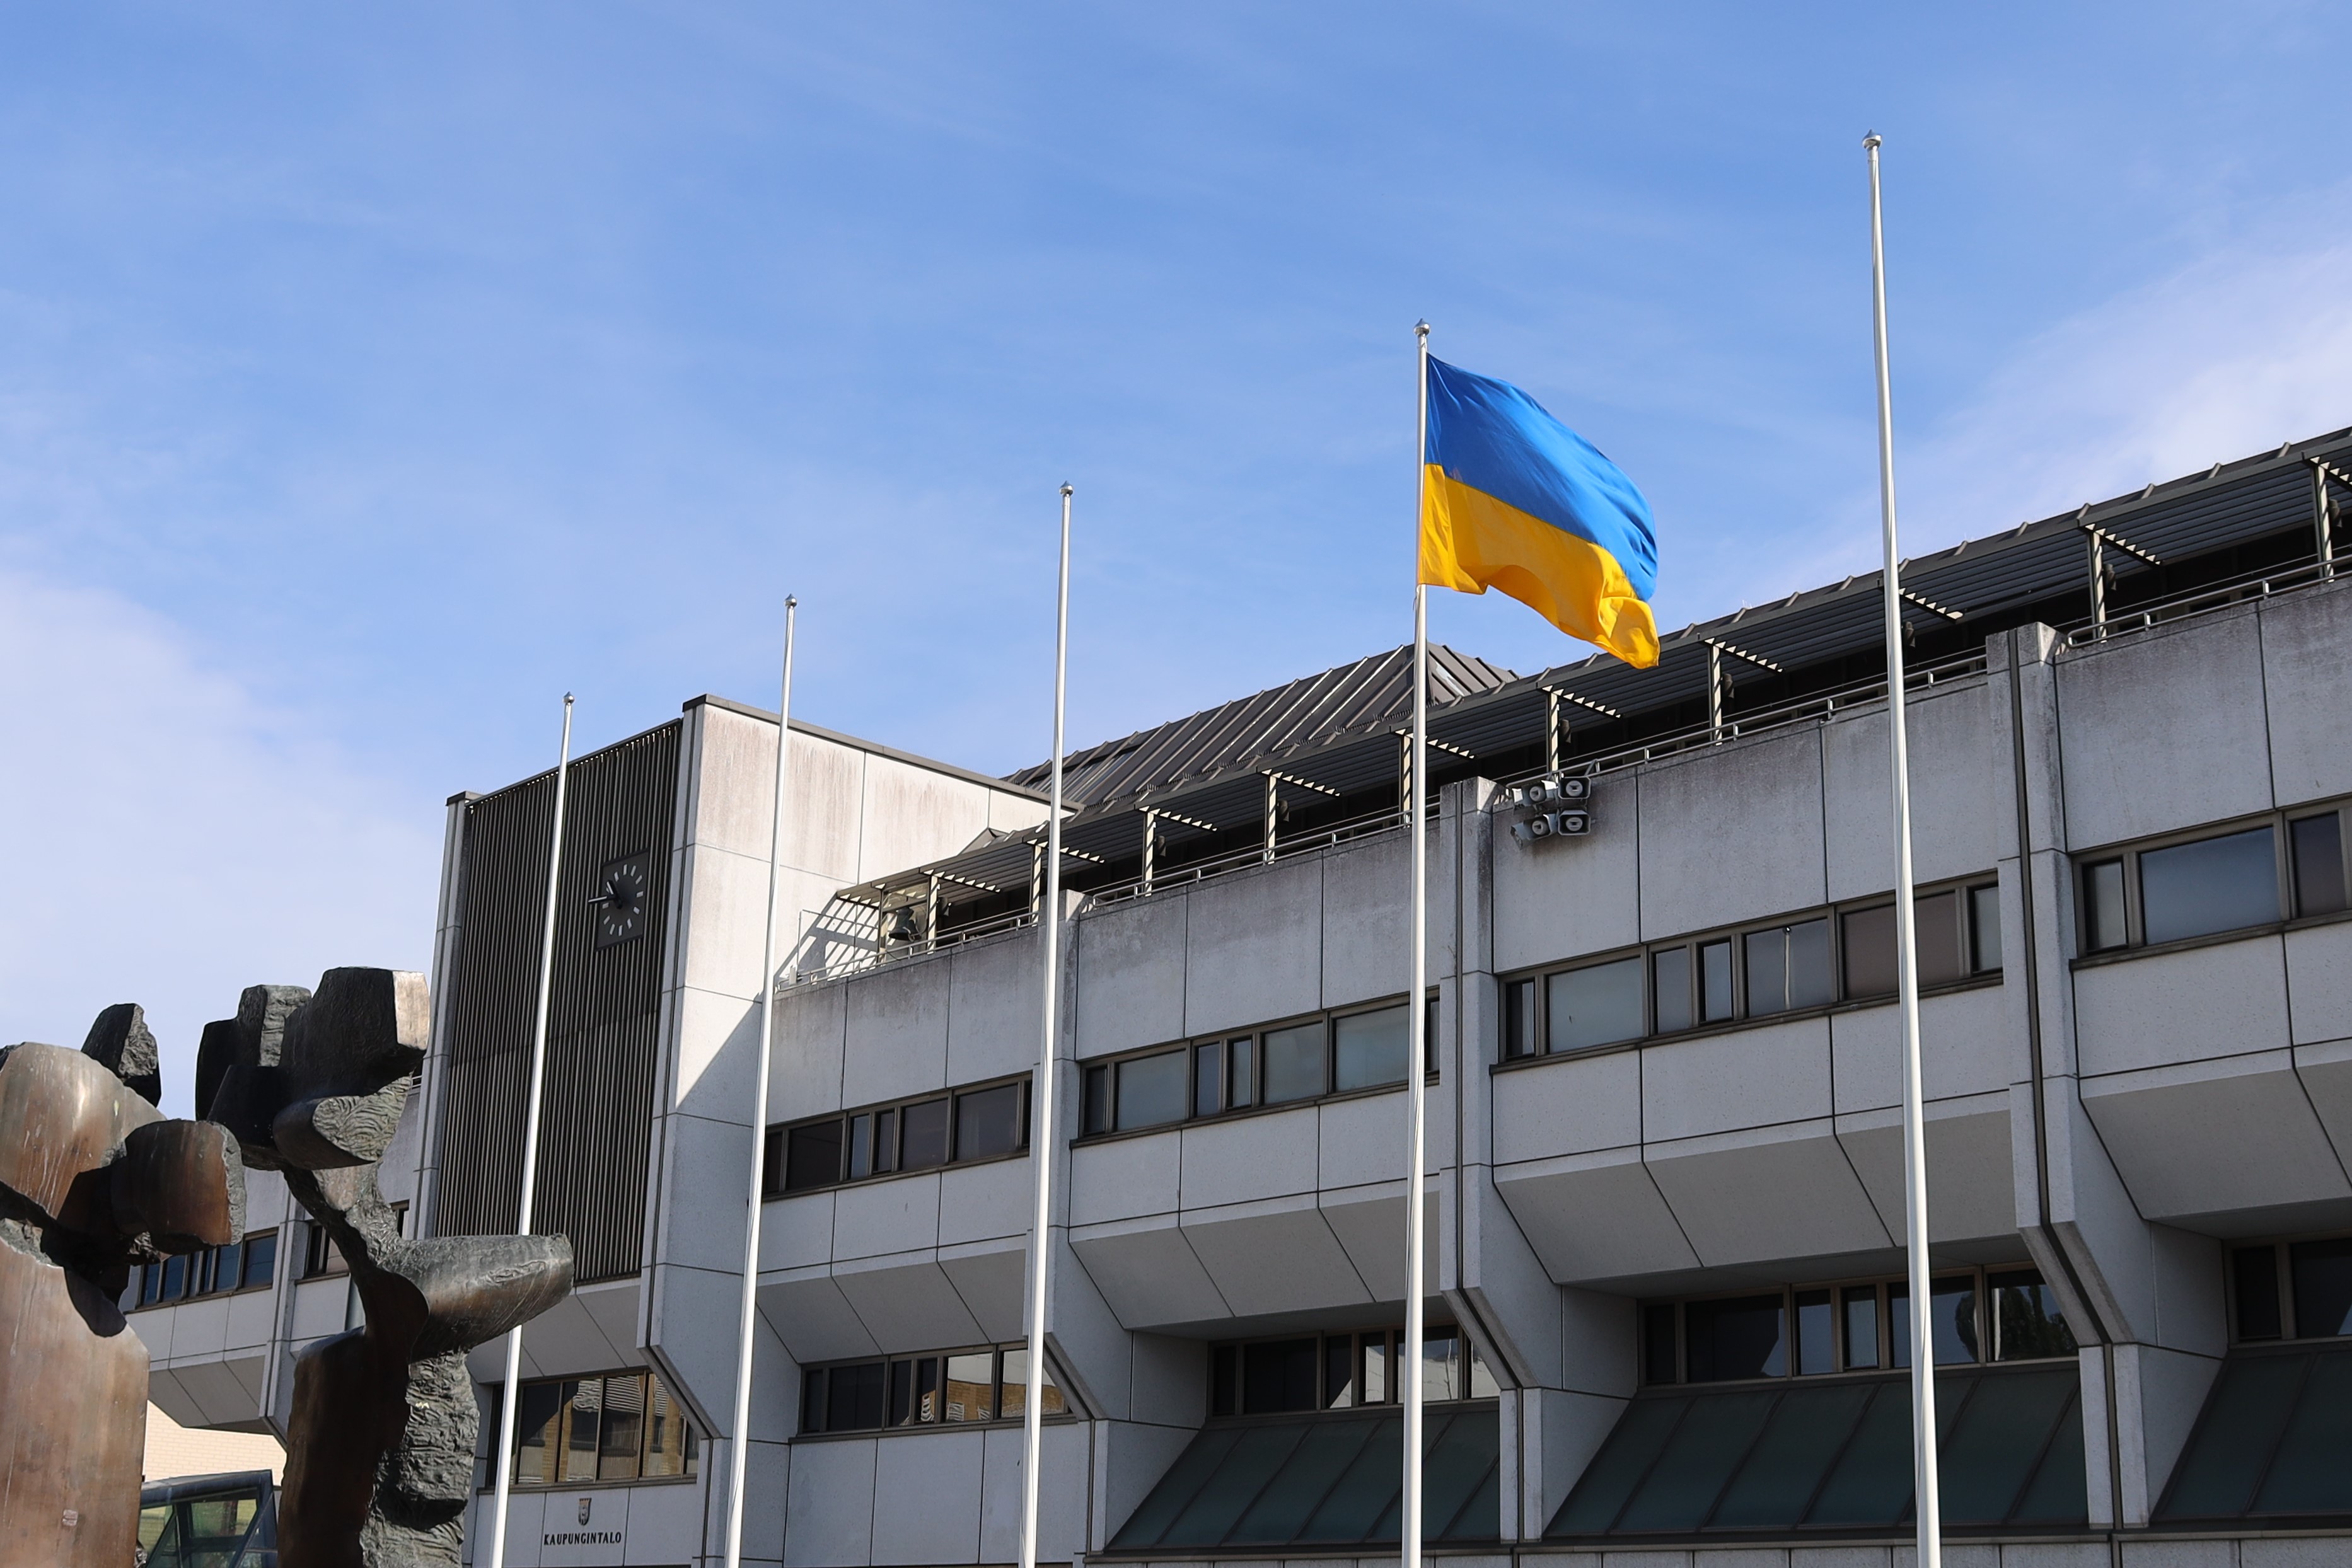 Ukrainan lippu lipputangossa.